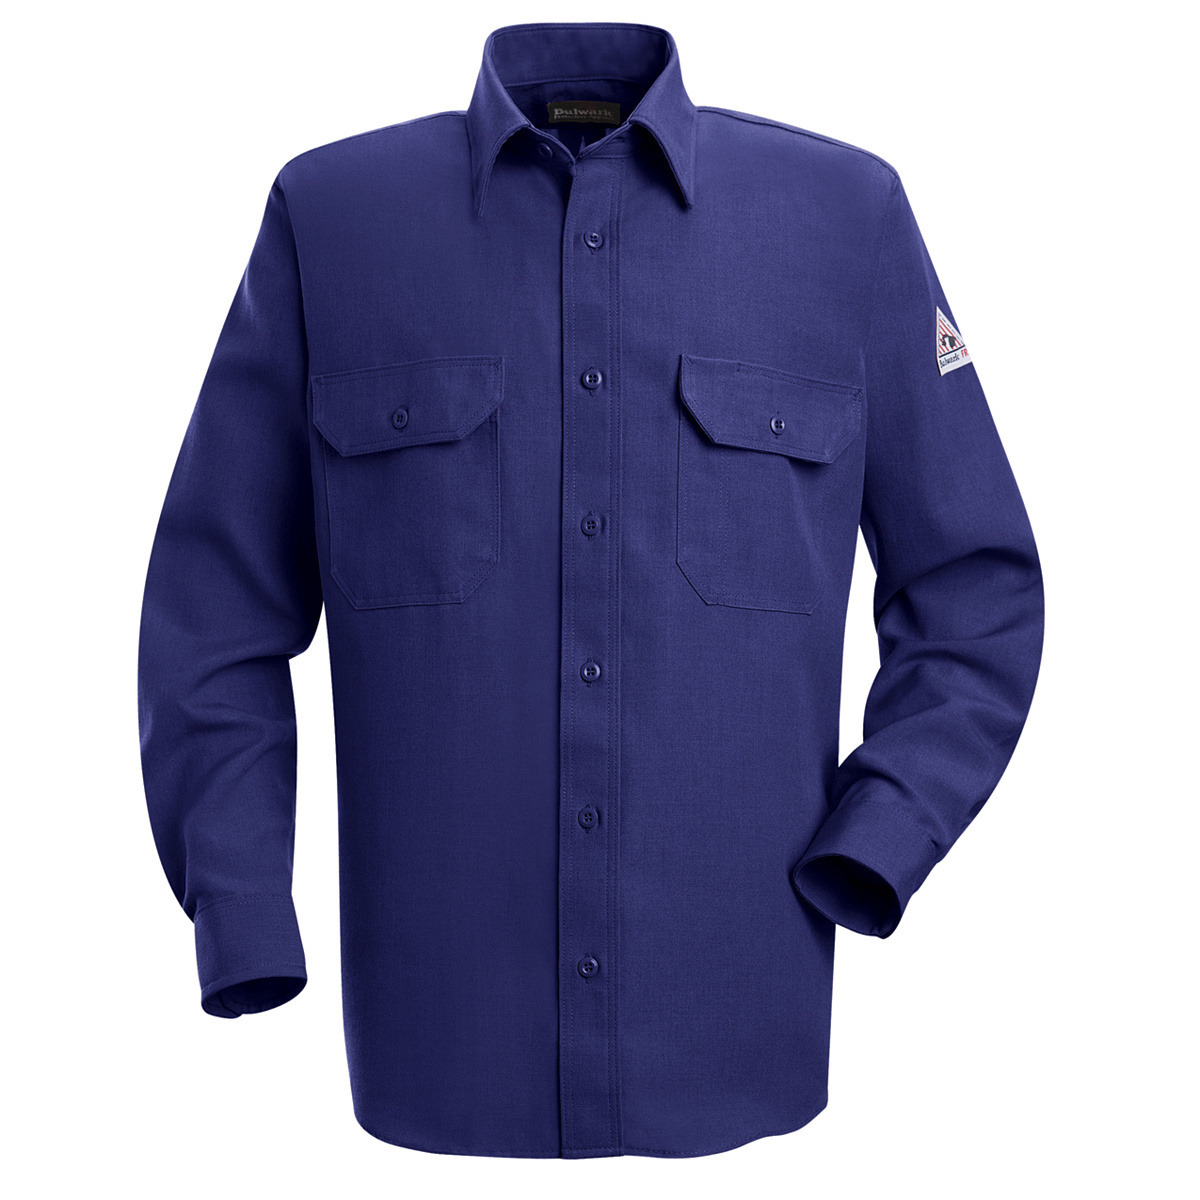 Bulwark® 3X Tall Royal Blue Nomex® IIIA/Nomex® Aramid/Kevlar® Aramid Flame Resistant Uniform Shirt With Button Front Closure